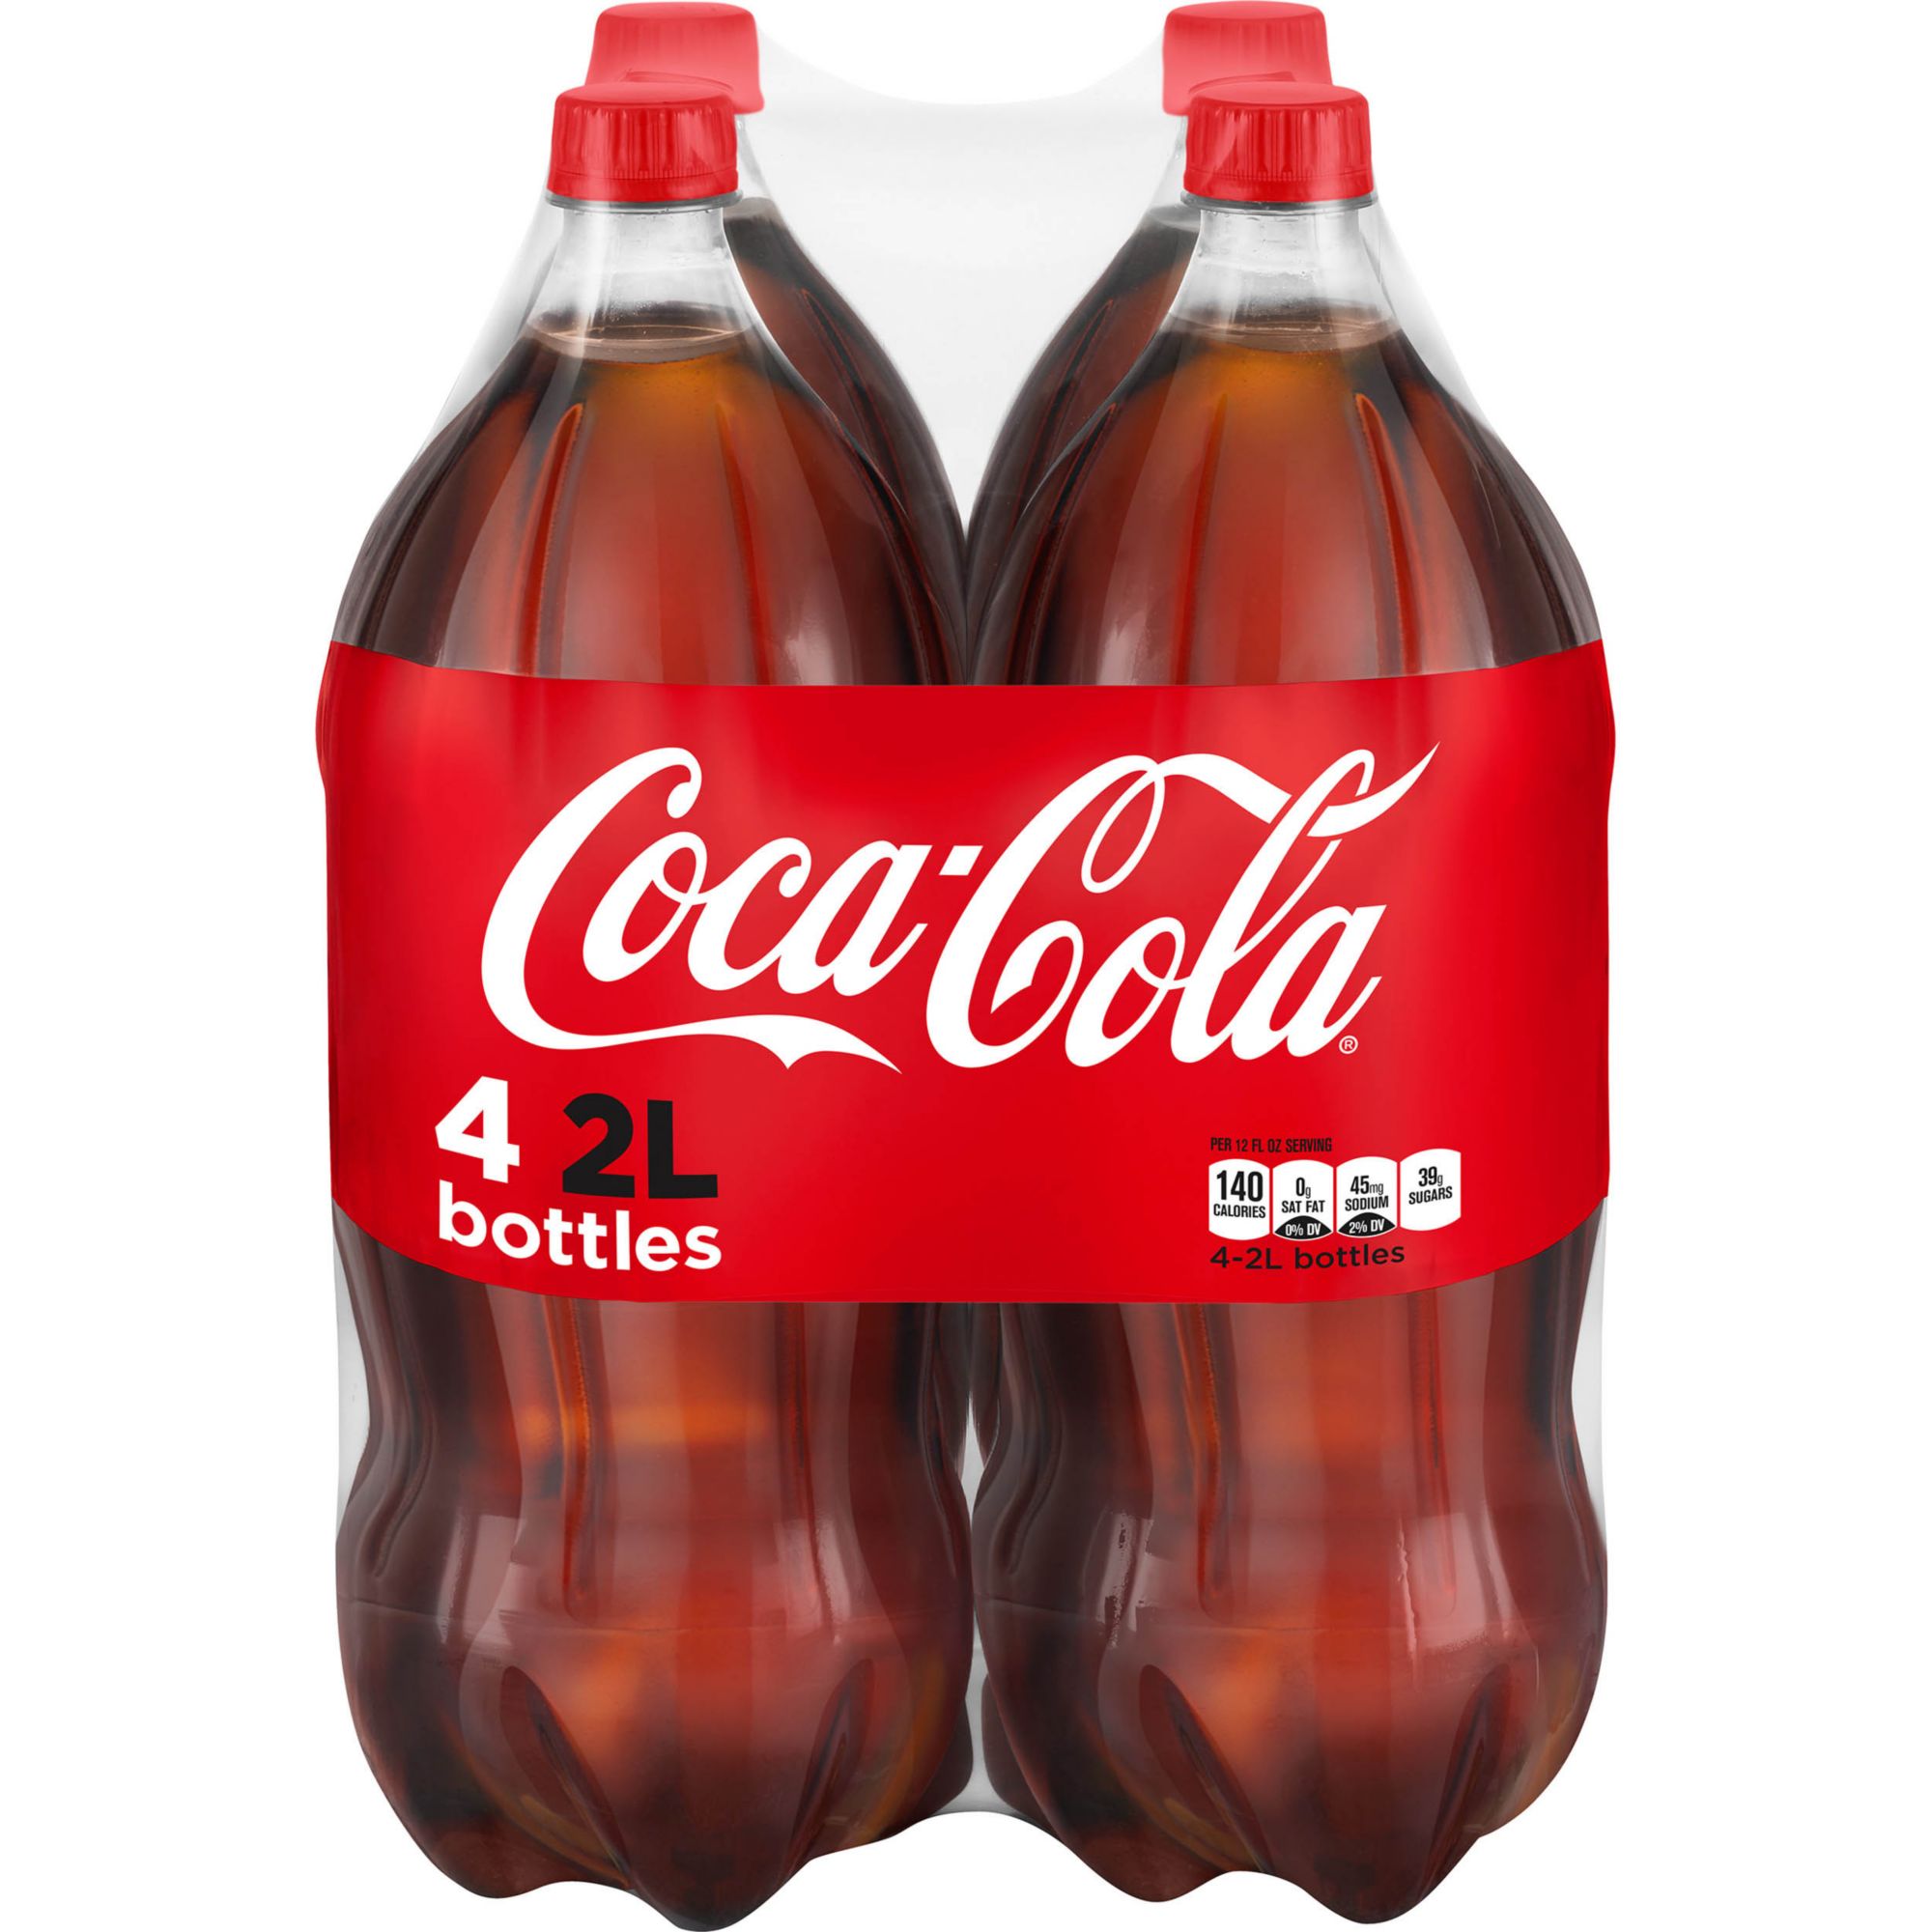 Coca-Cola Bottles, 4 pk./2L